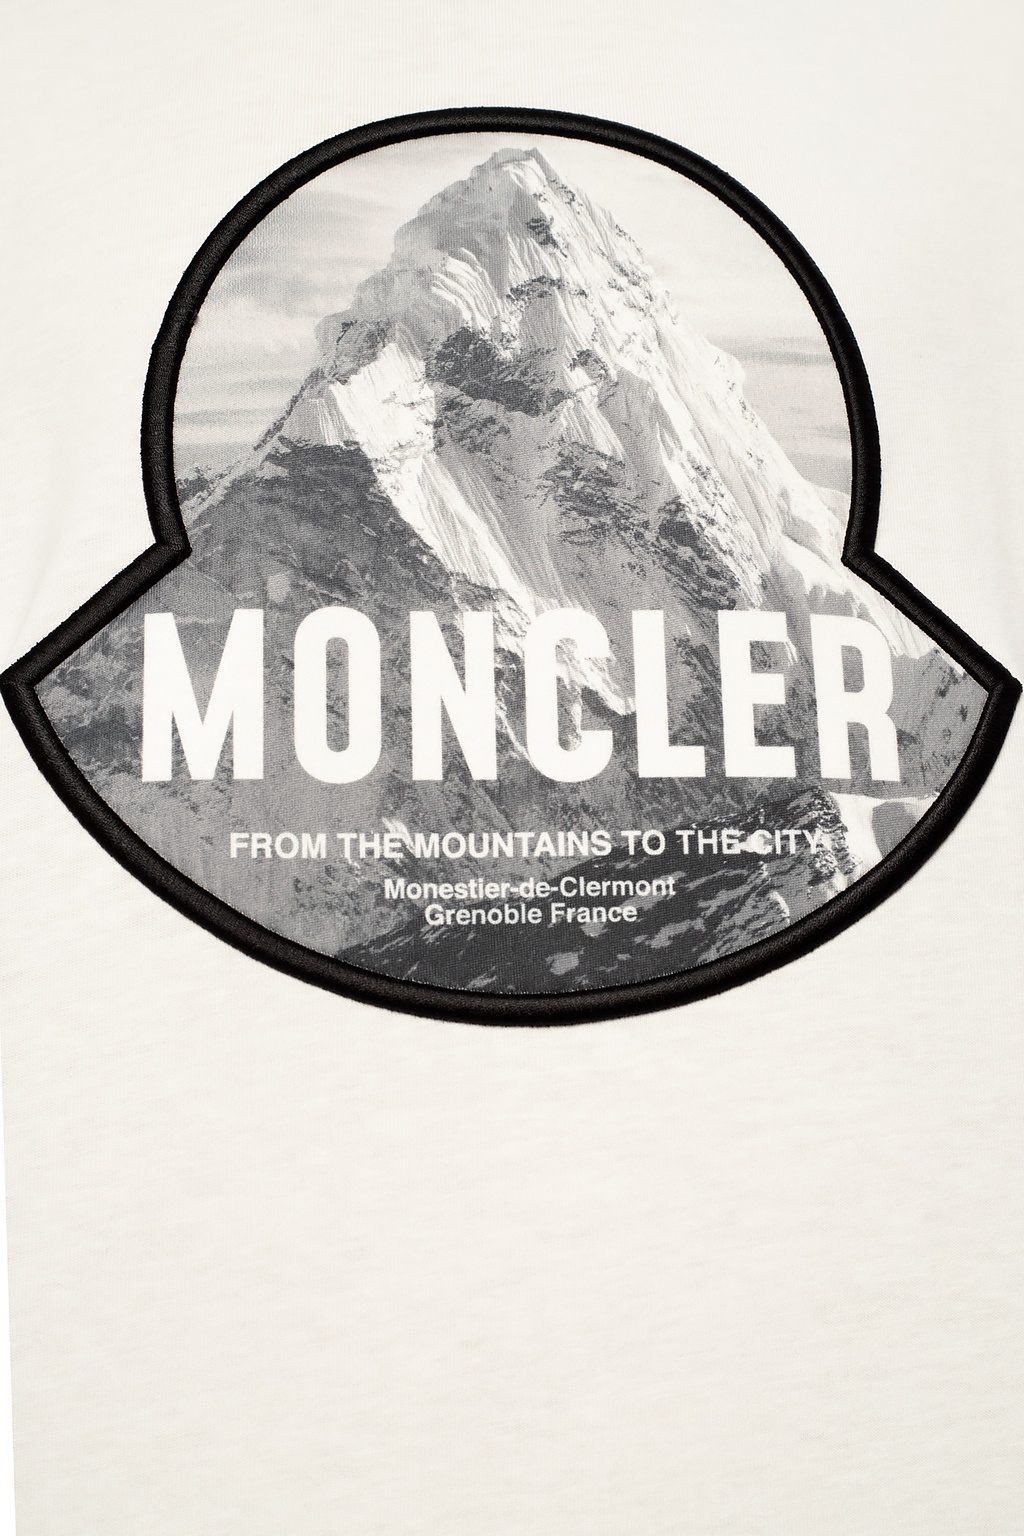 moncler mountain logo t shirt